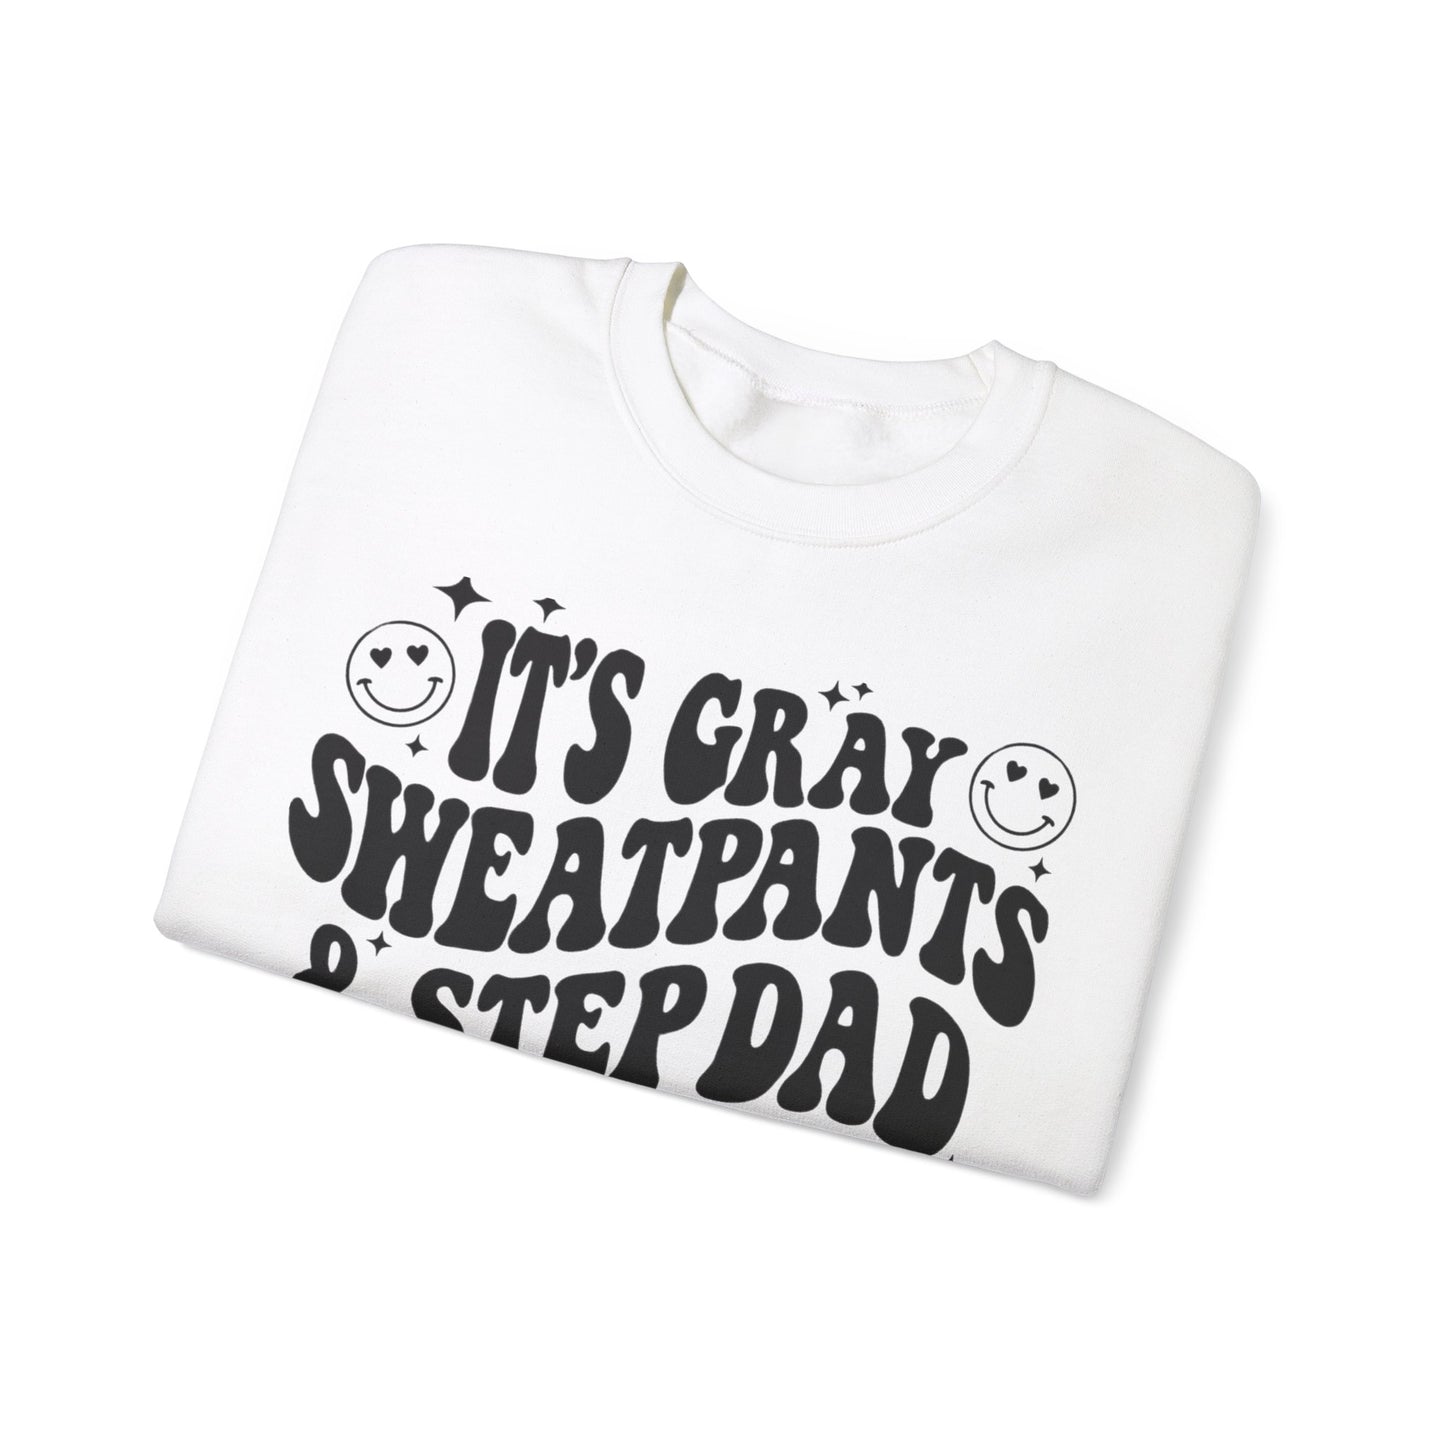 It's Gray Sweatpants & Stepdad Season Crewneck Sweatshirt